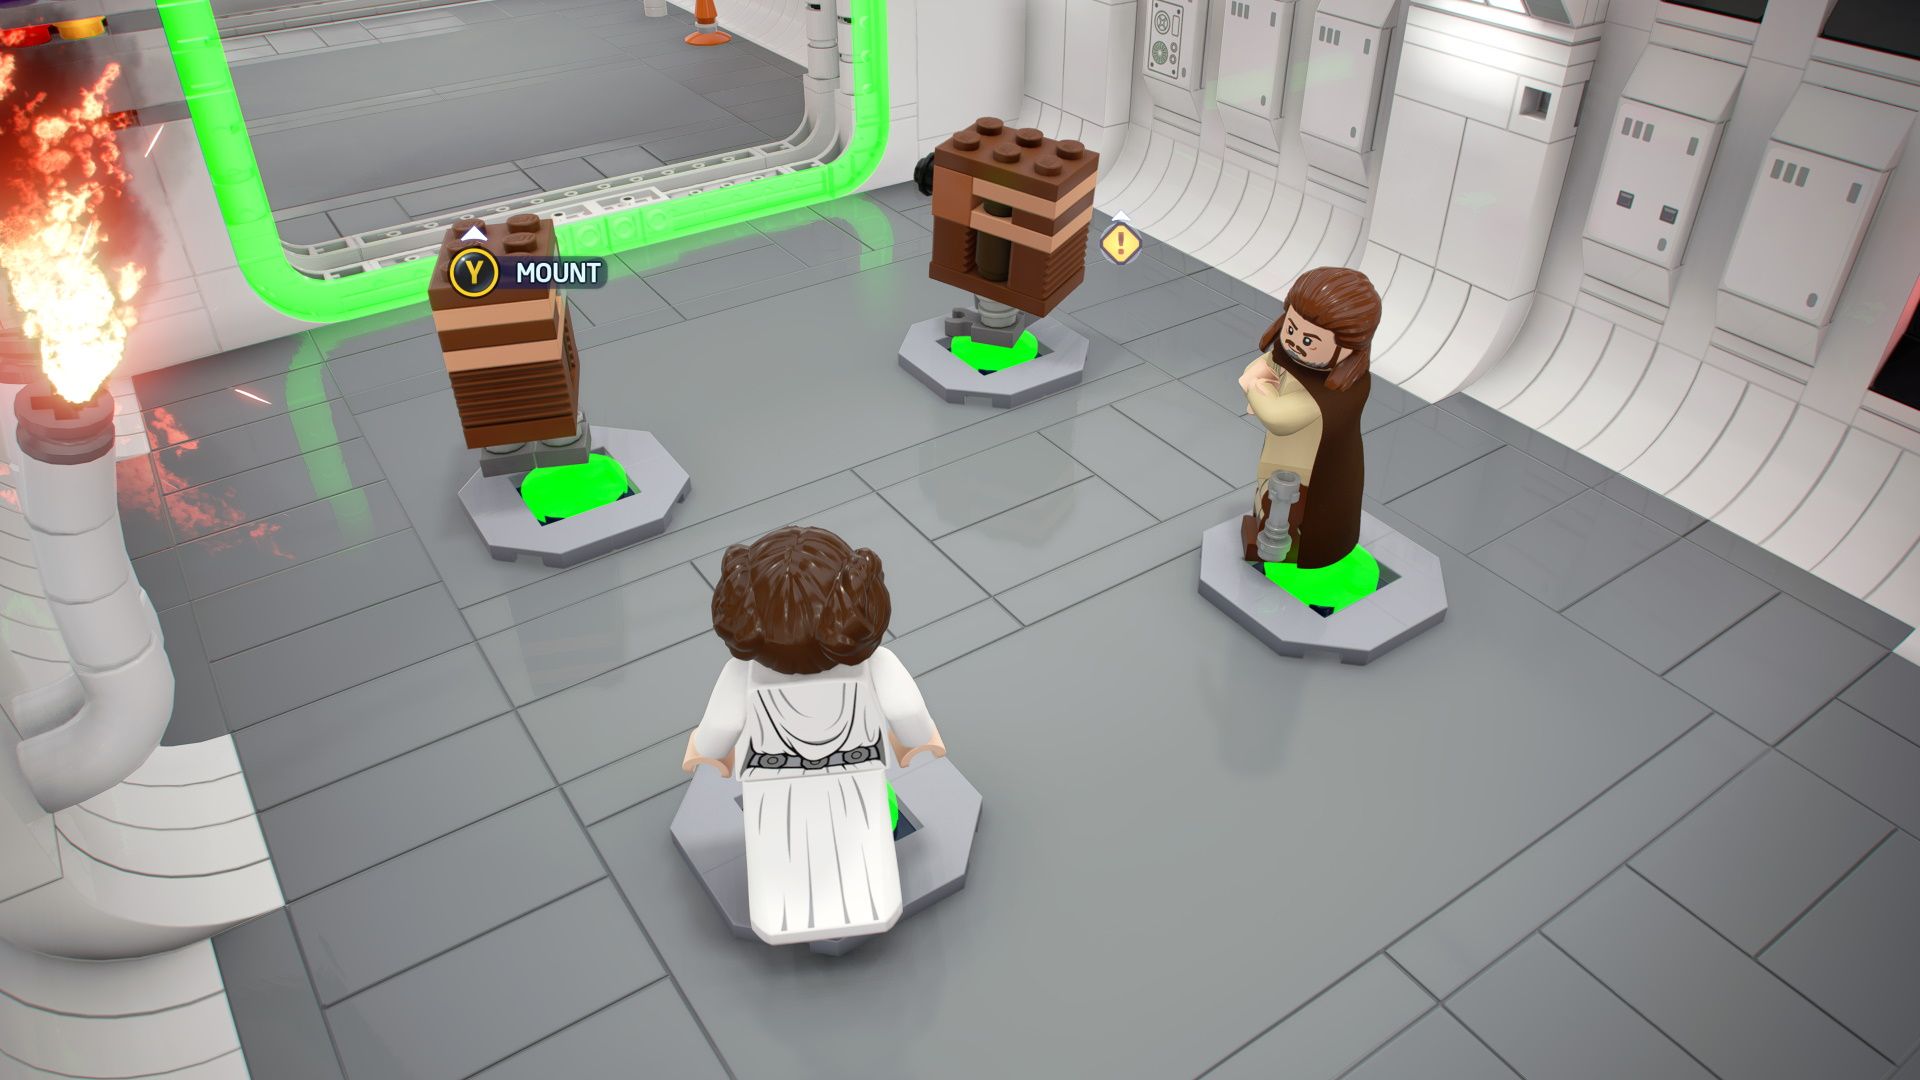 Lego Star Wars Skywalker Saga, Episode 4, Boarding Party, Hologram Room Minikit